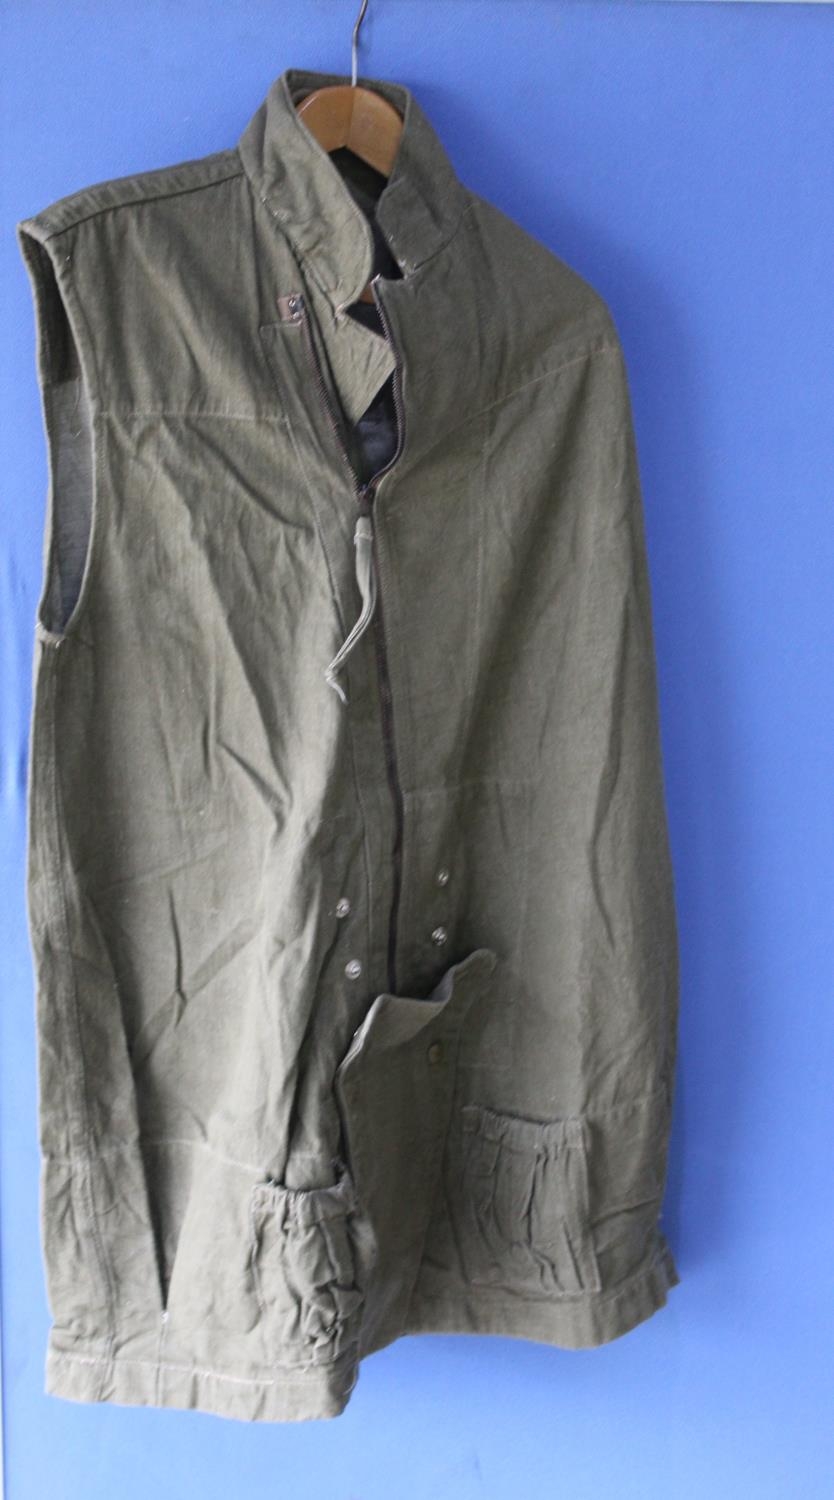 British parachutist jacket (sleeveless) 1942 pattern, dated 1946, Height 6'1 - 6'2, Bust 39" - 44"